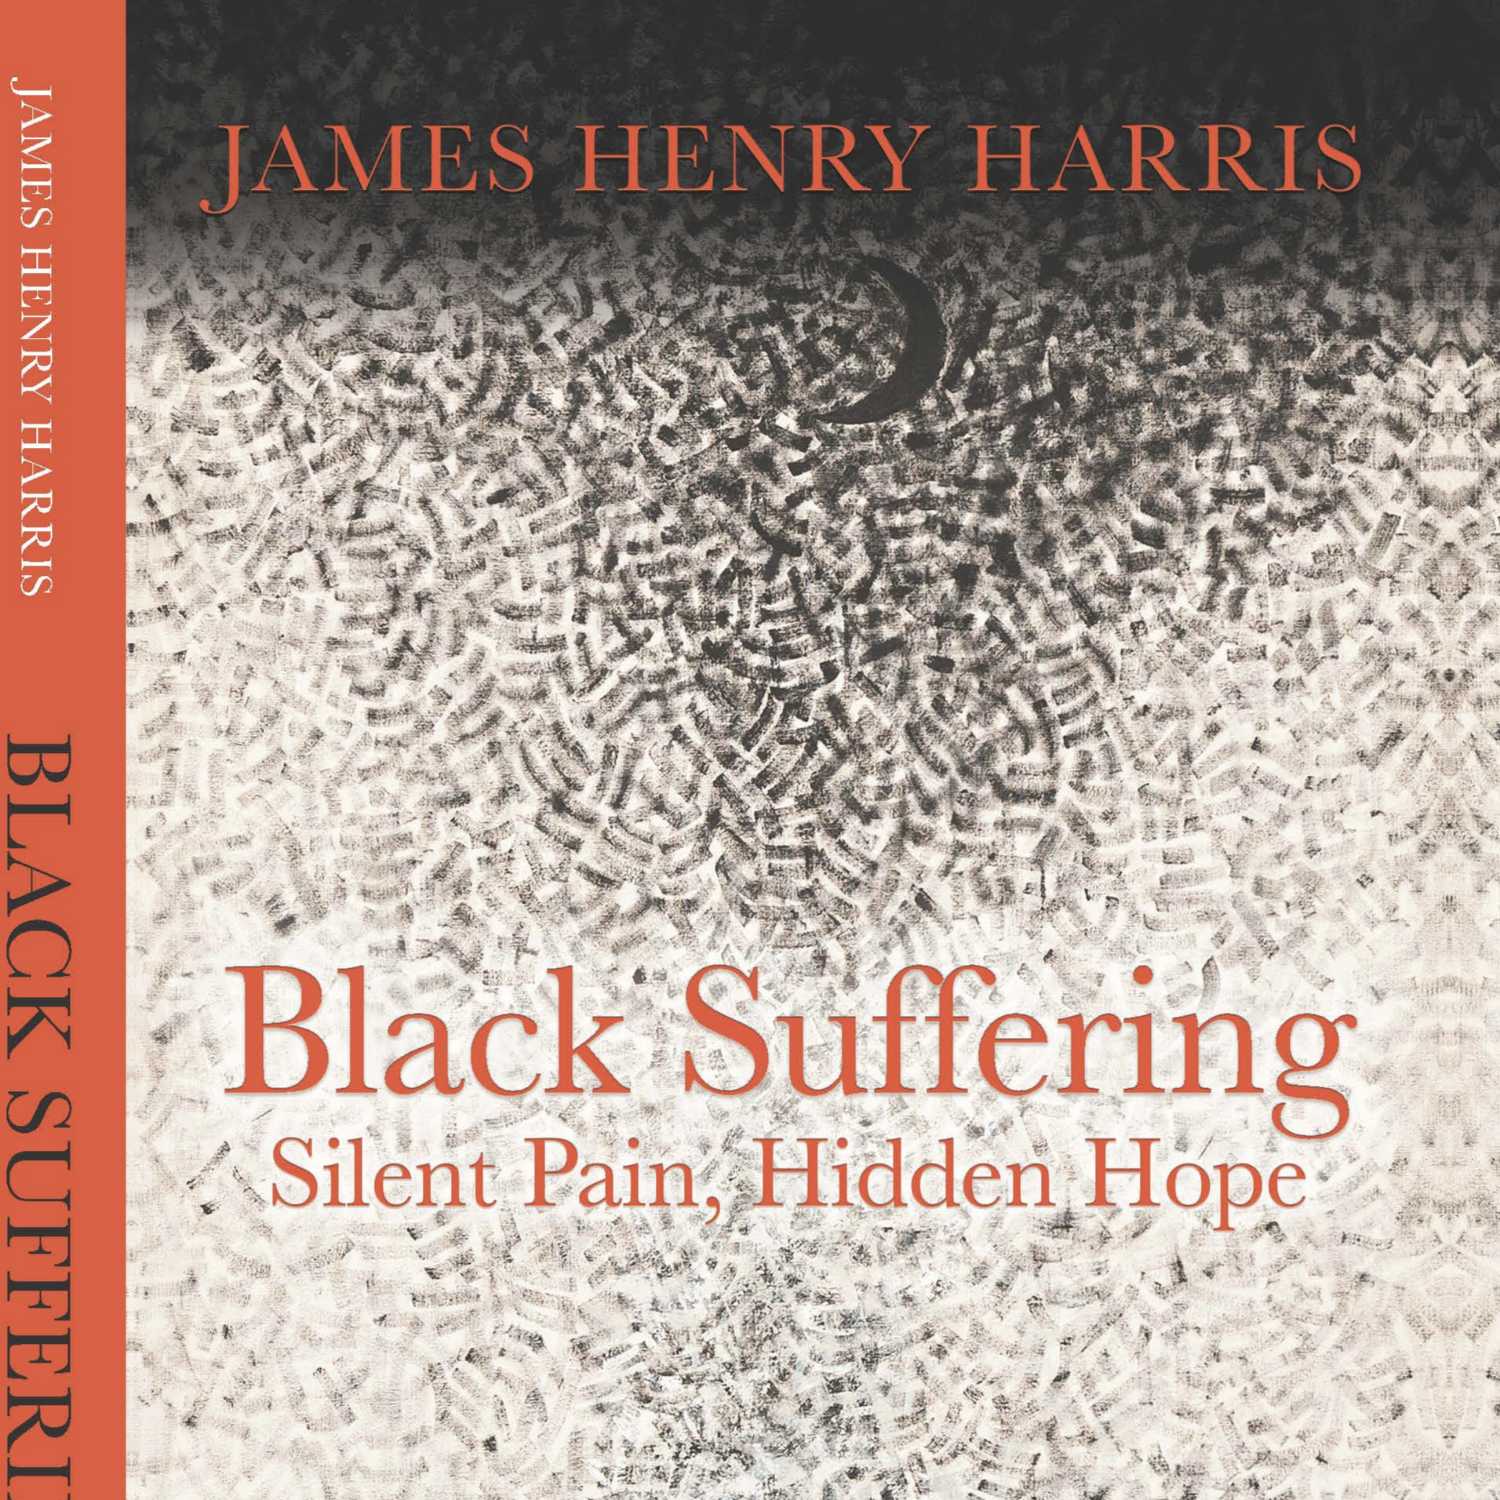 Black Suffering book conversation